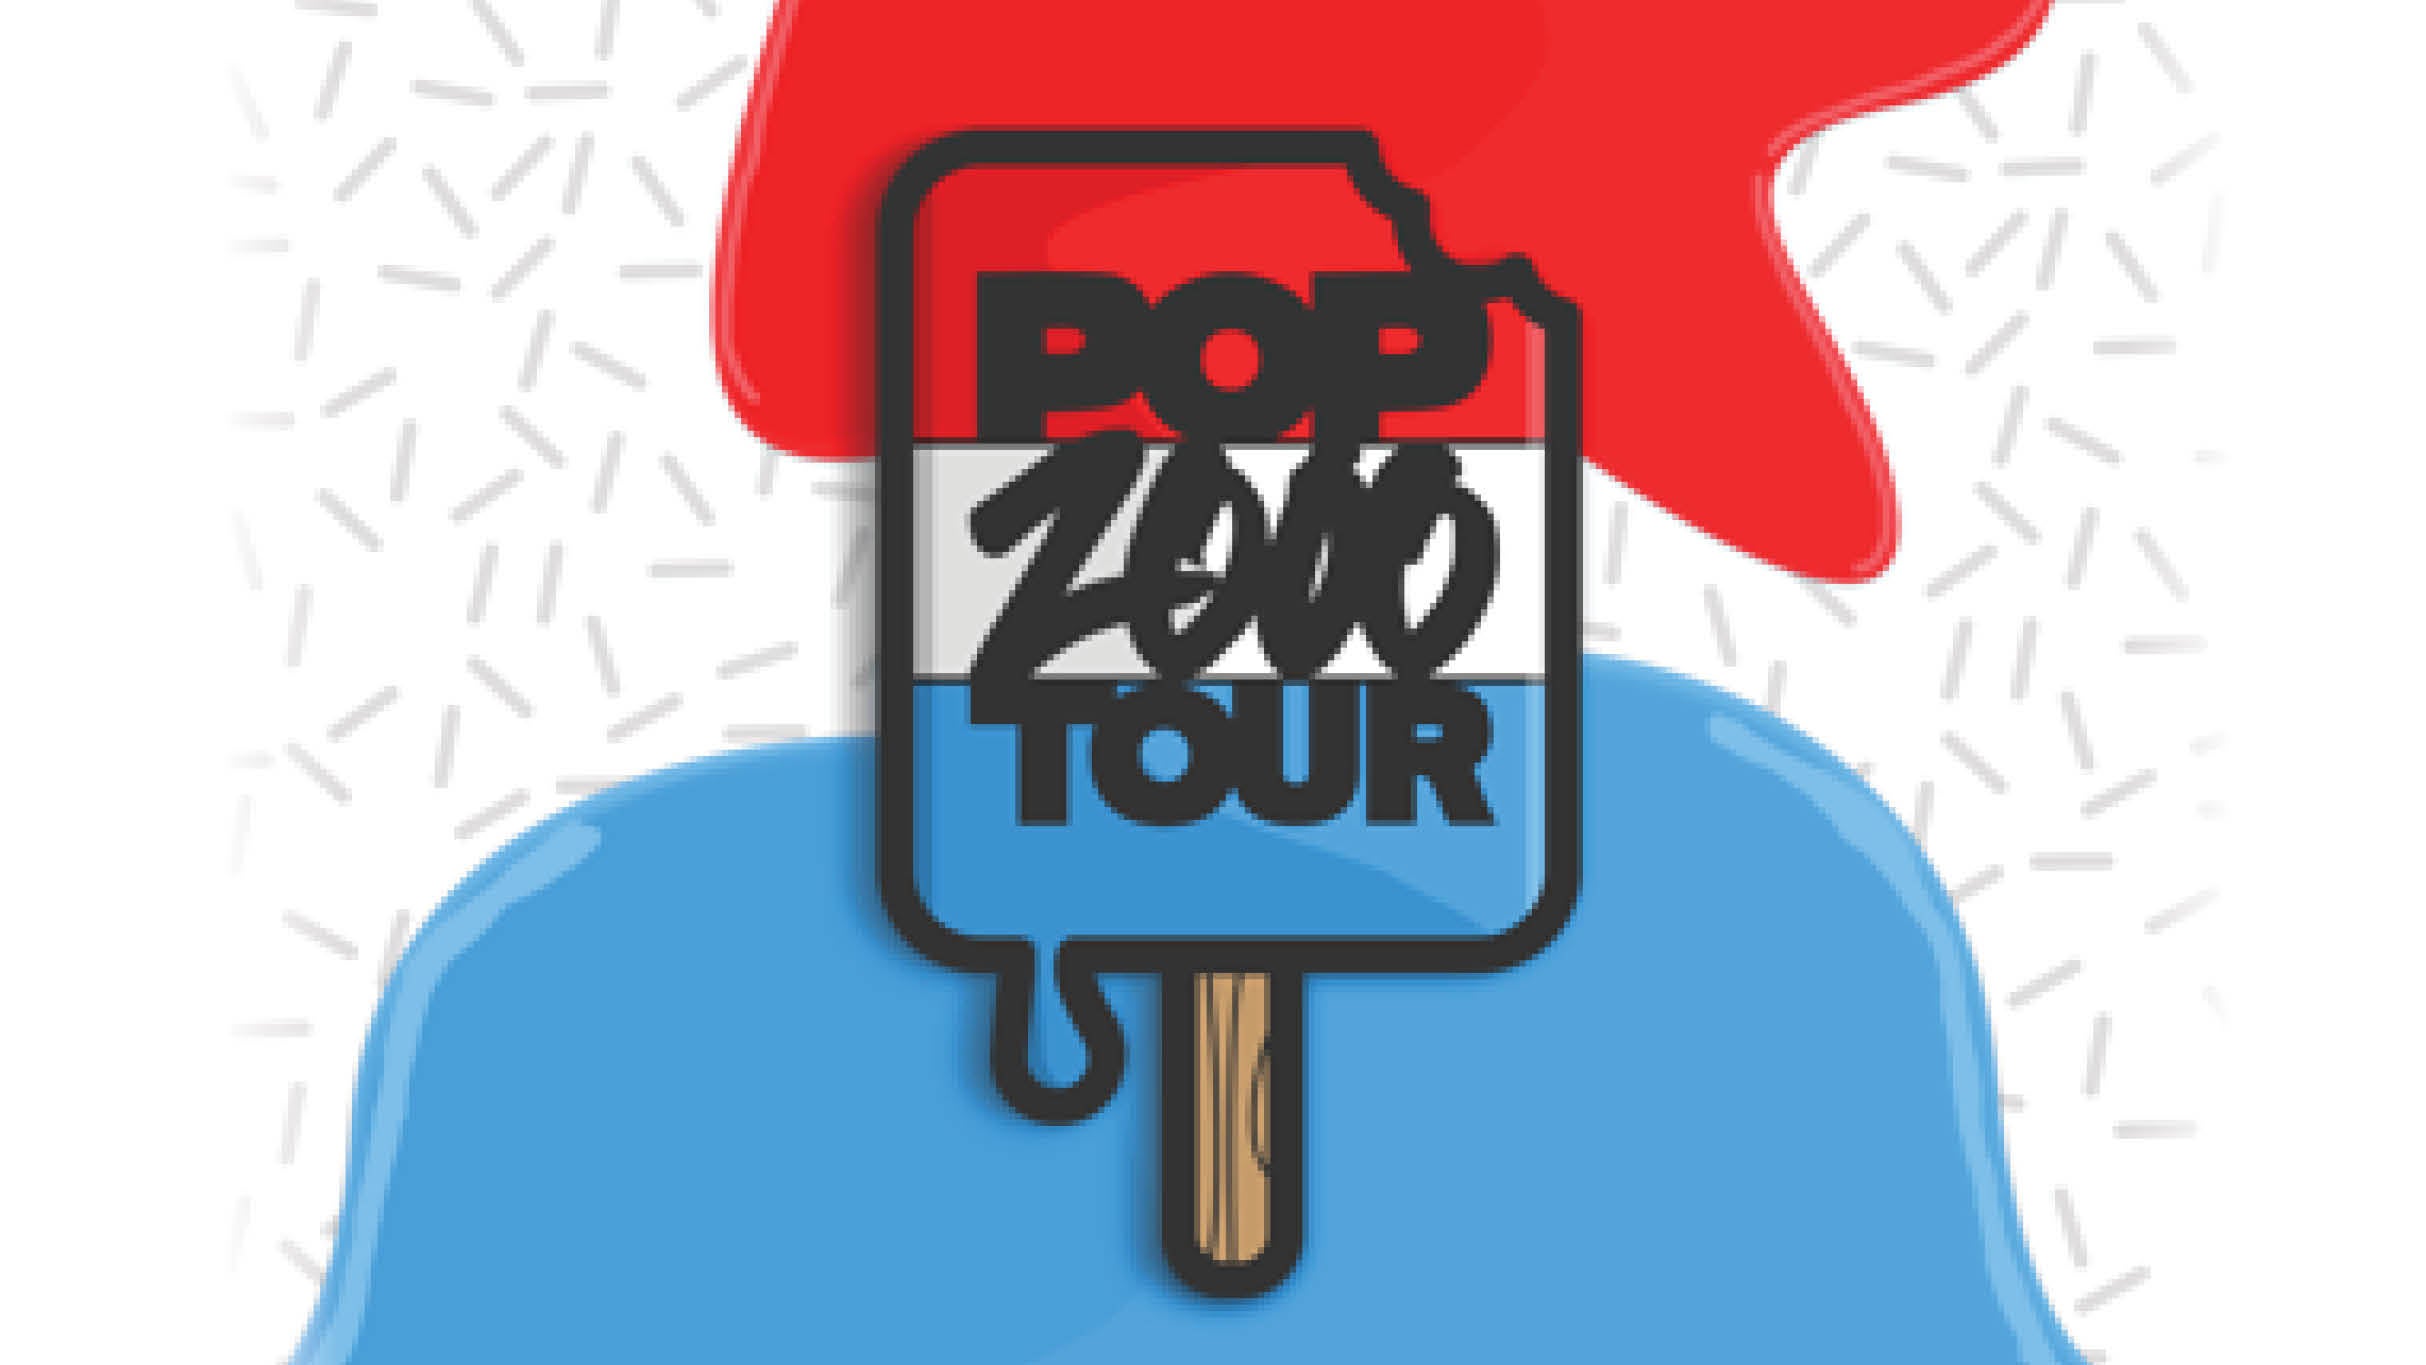 POP 2000 TOUR with Chris Kirkpatrick of *NSYNC, O-Town & LFO